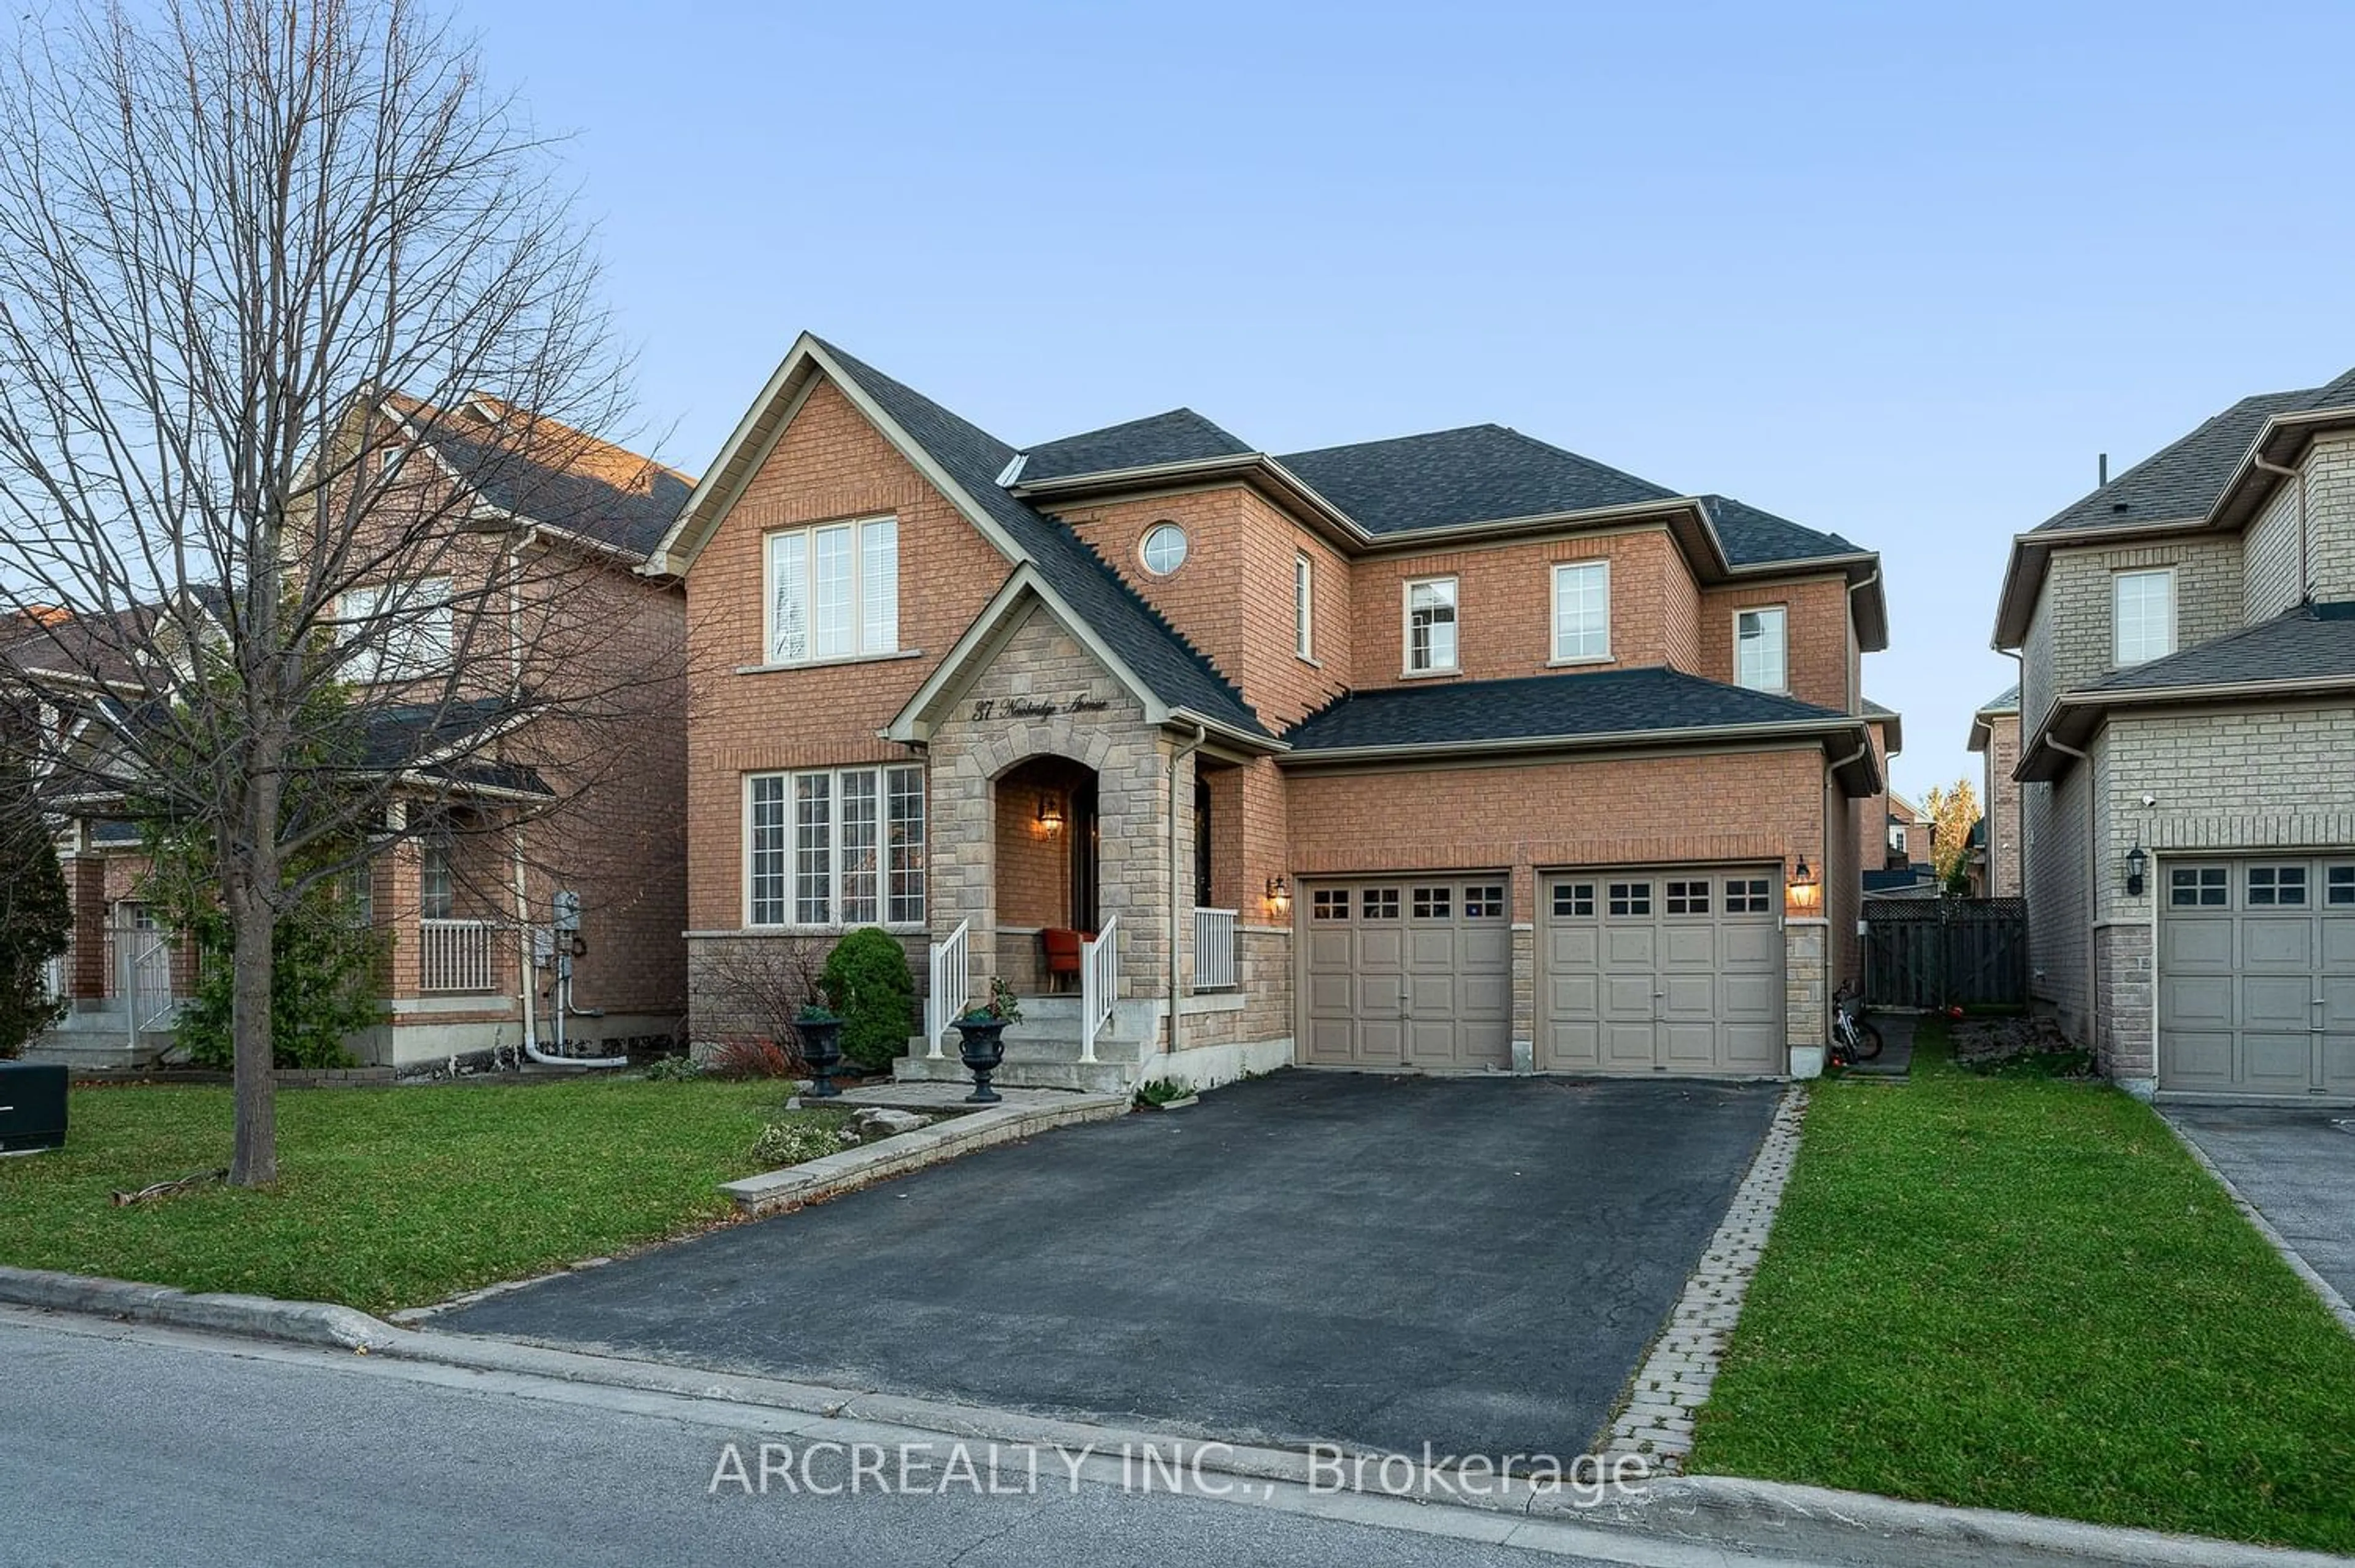 Home with brick exterior material for 37 Newbridge Ave, Richmond Hill Ontario L4E 3Z9